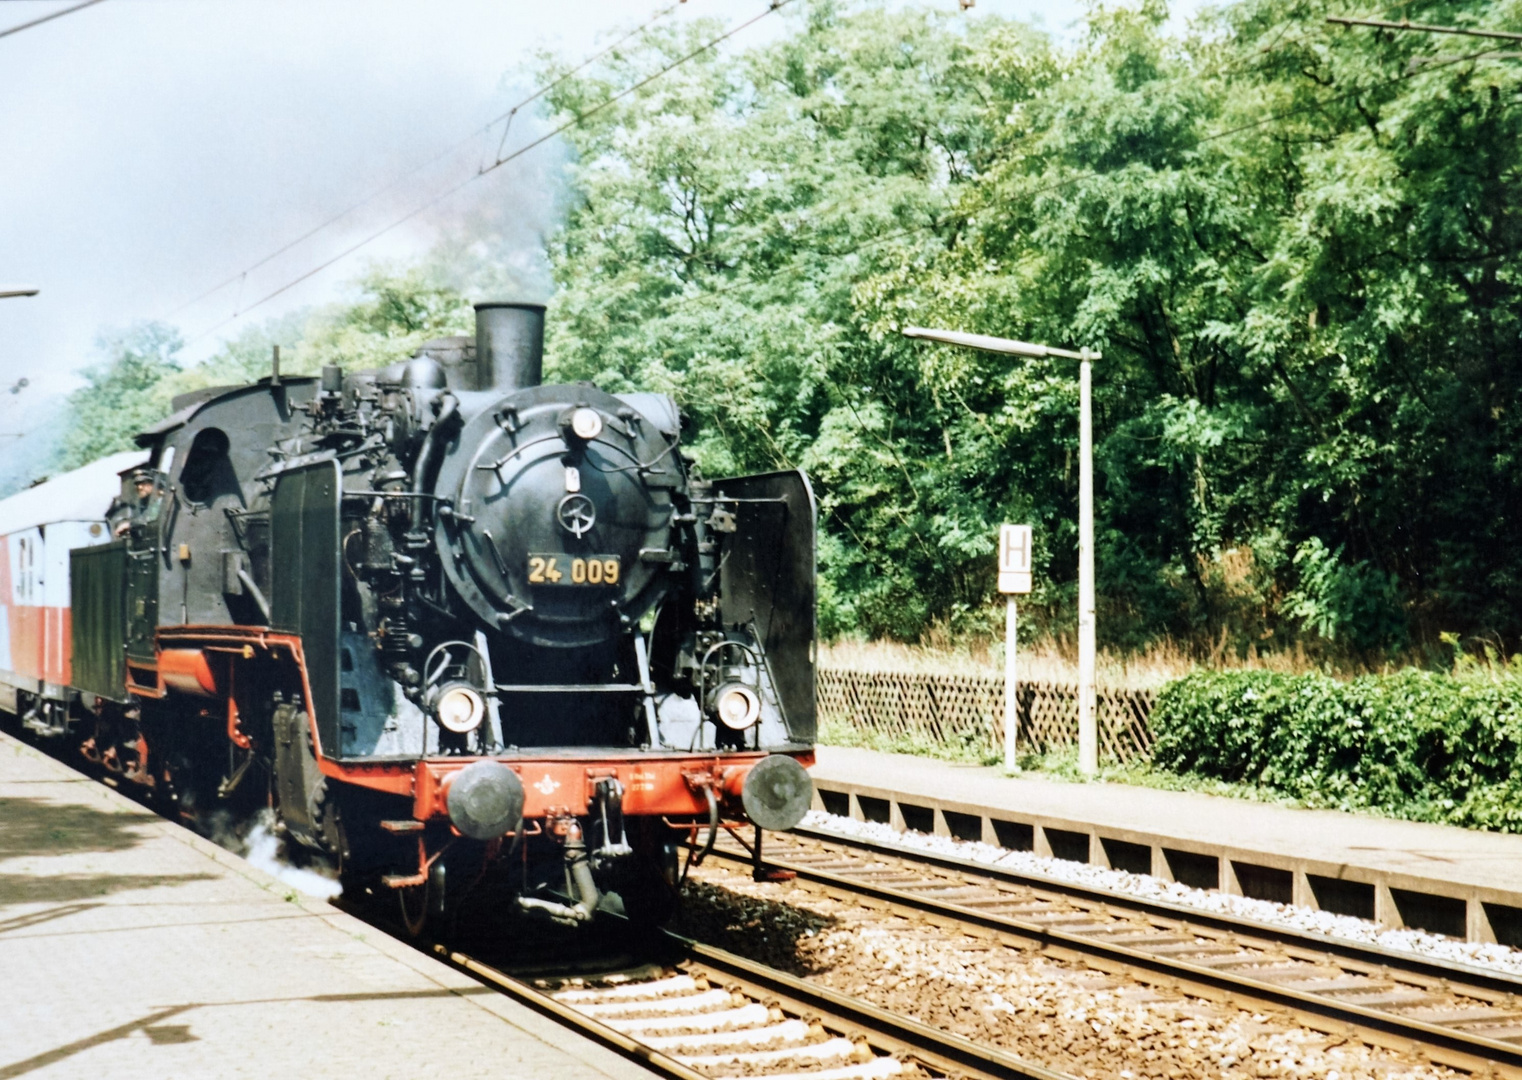 Museumslokomotive 24 009